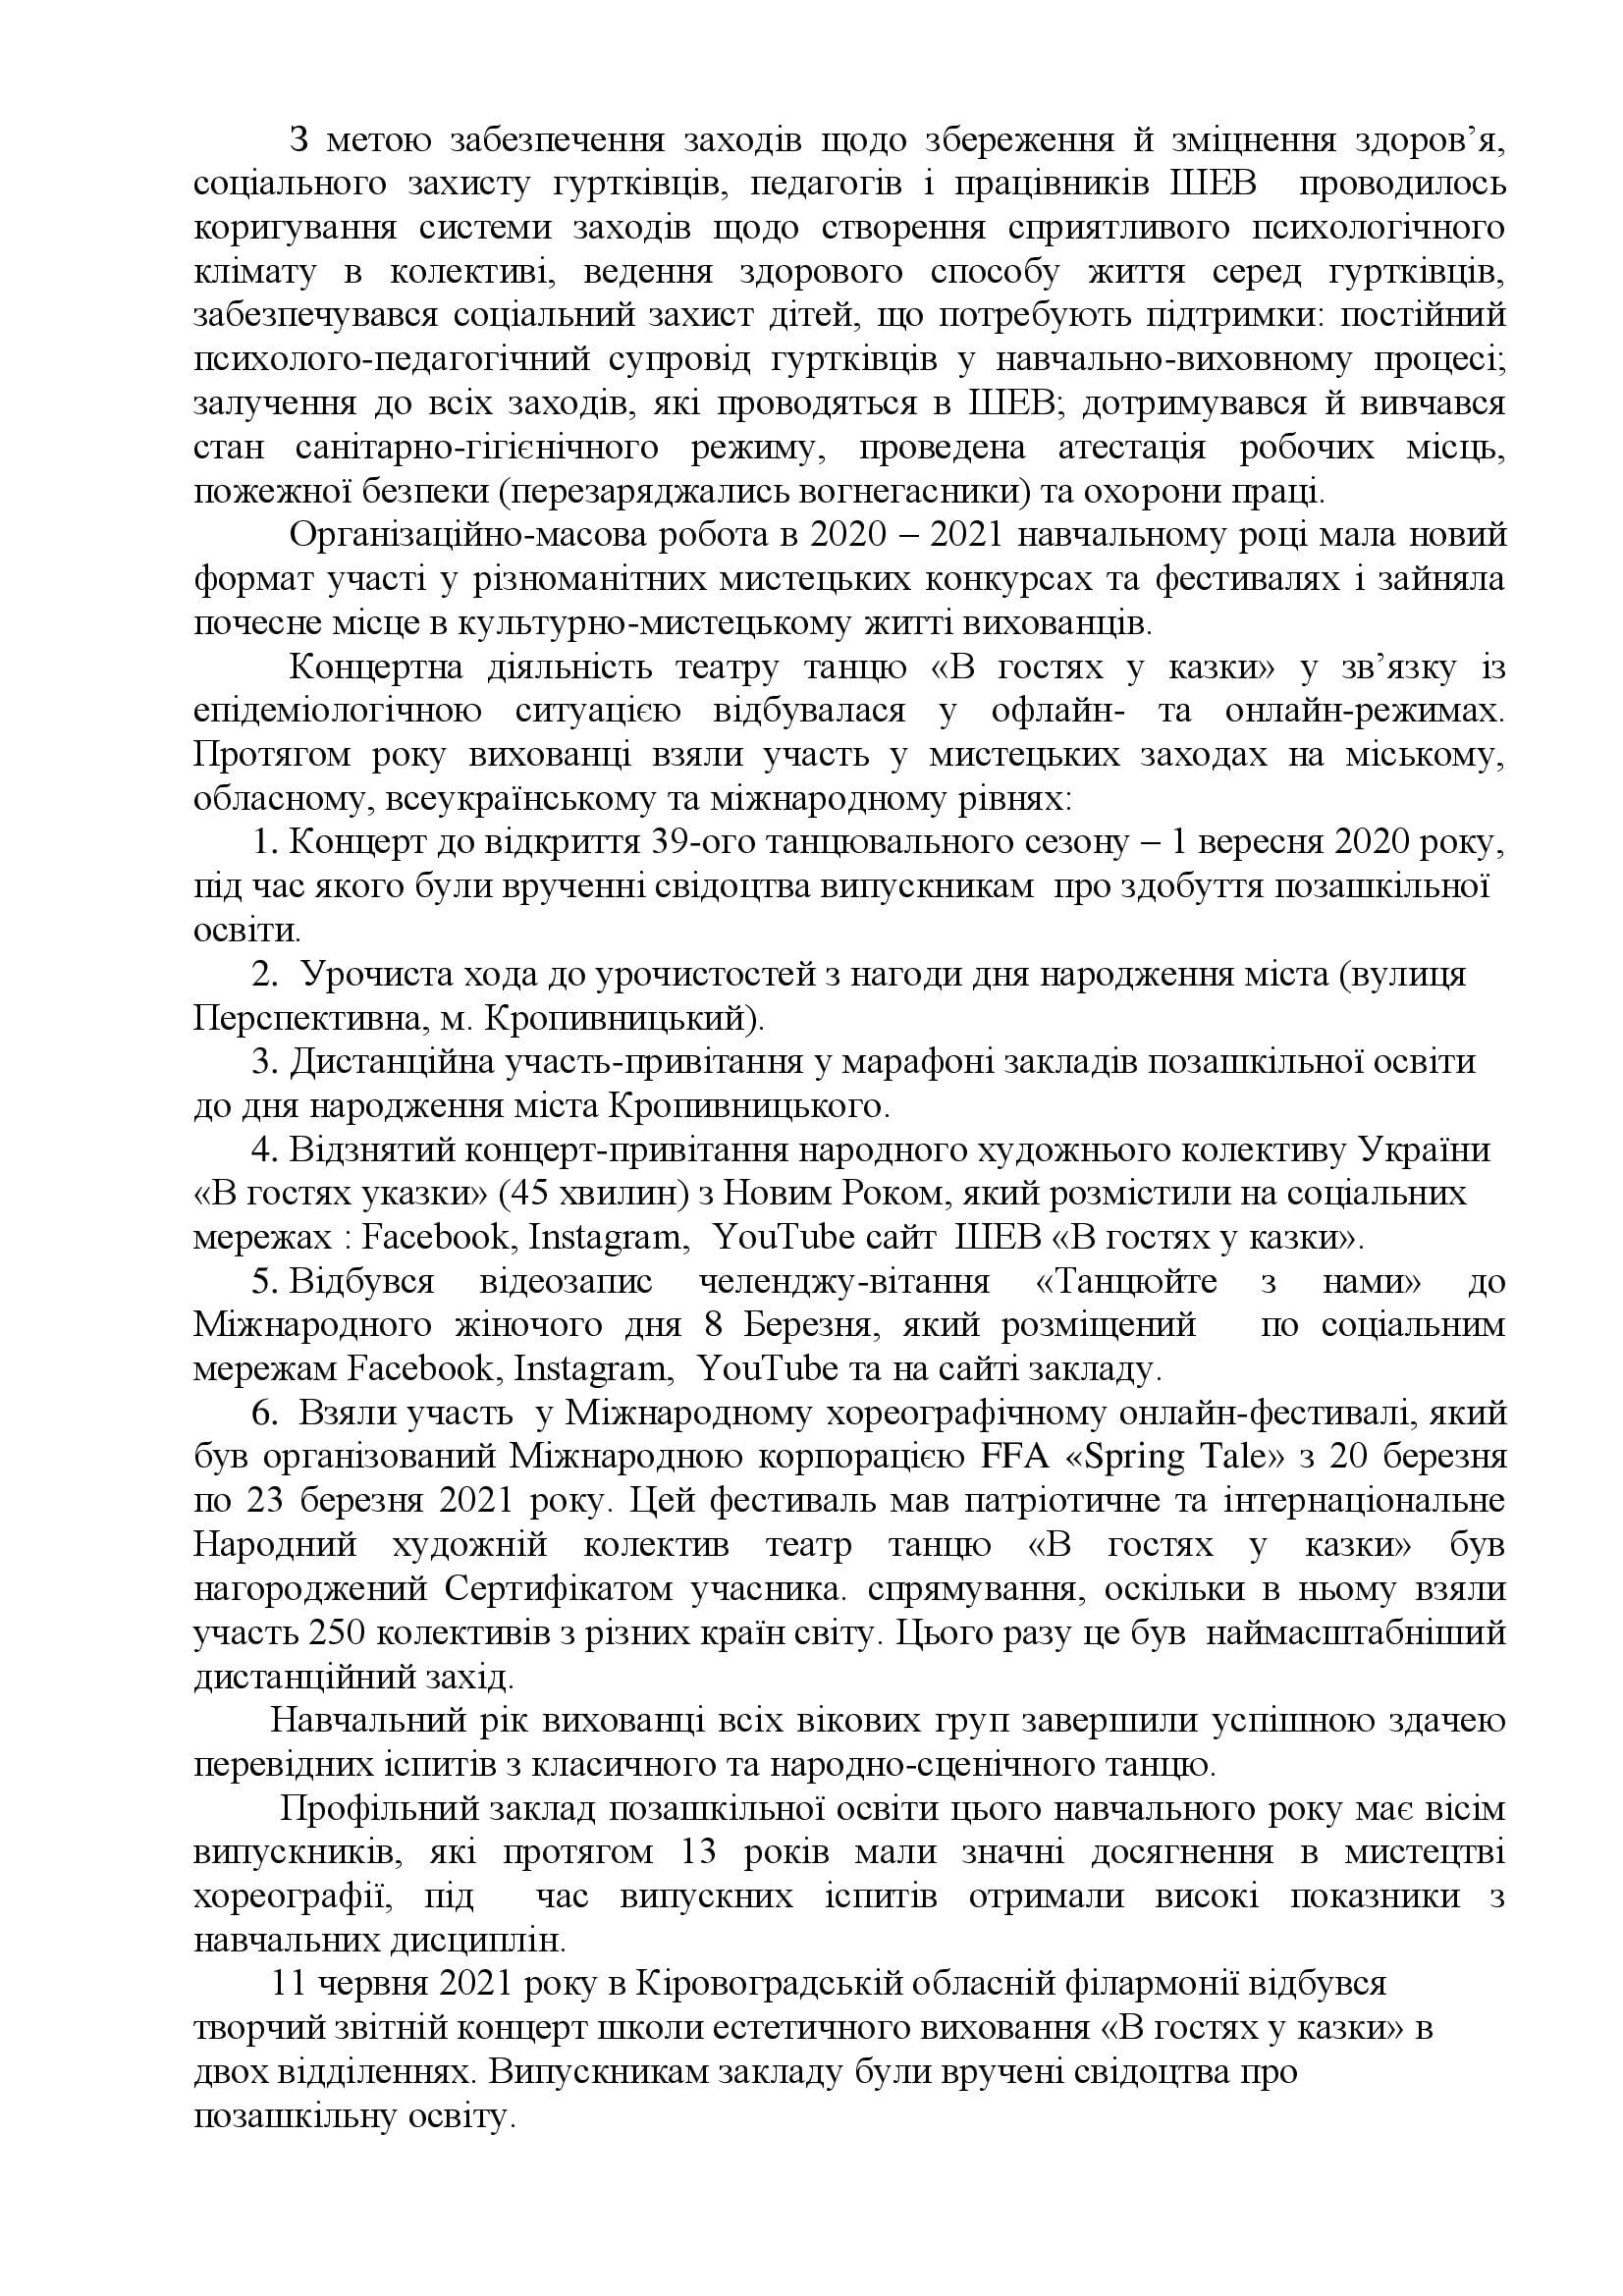 План роботи ШЕВ В гостях у казки  2021-2022_00010